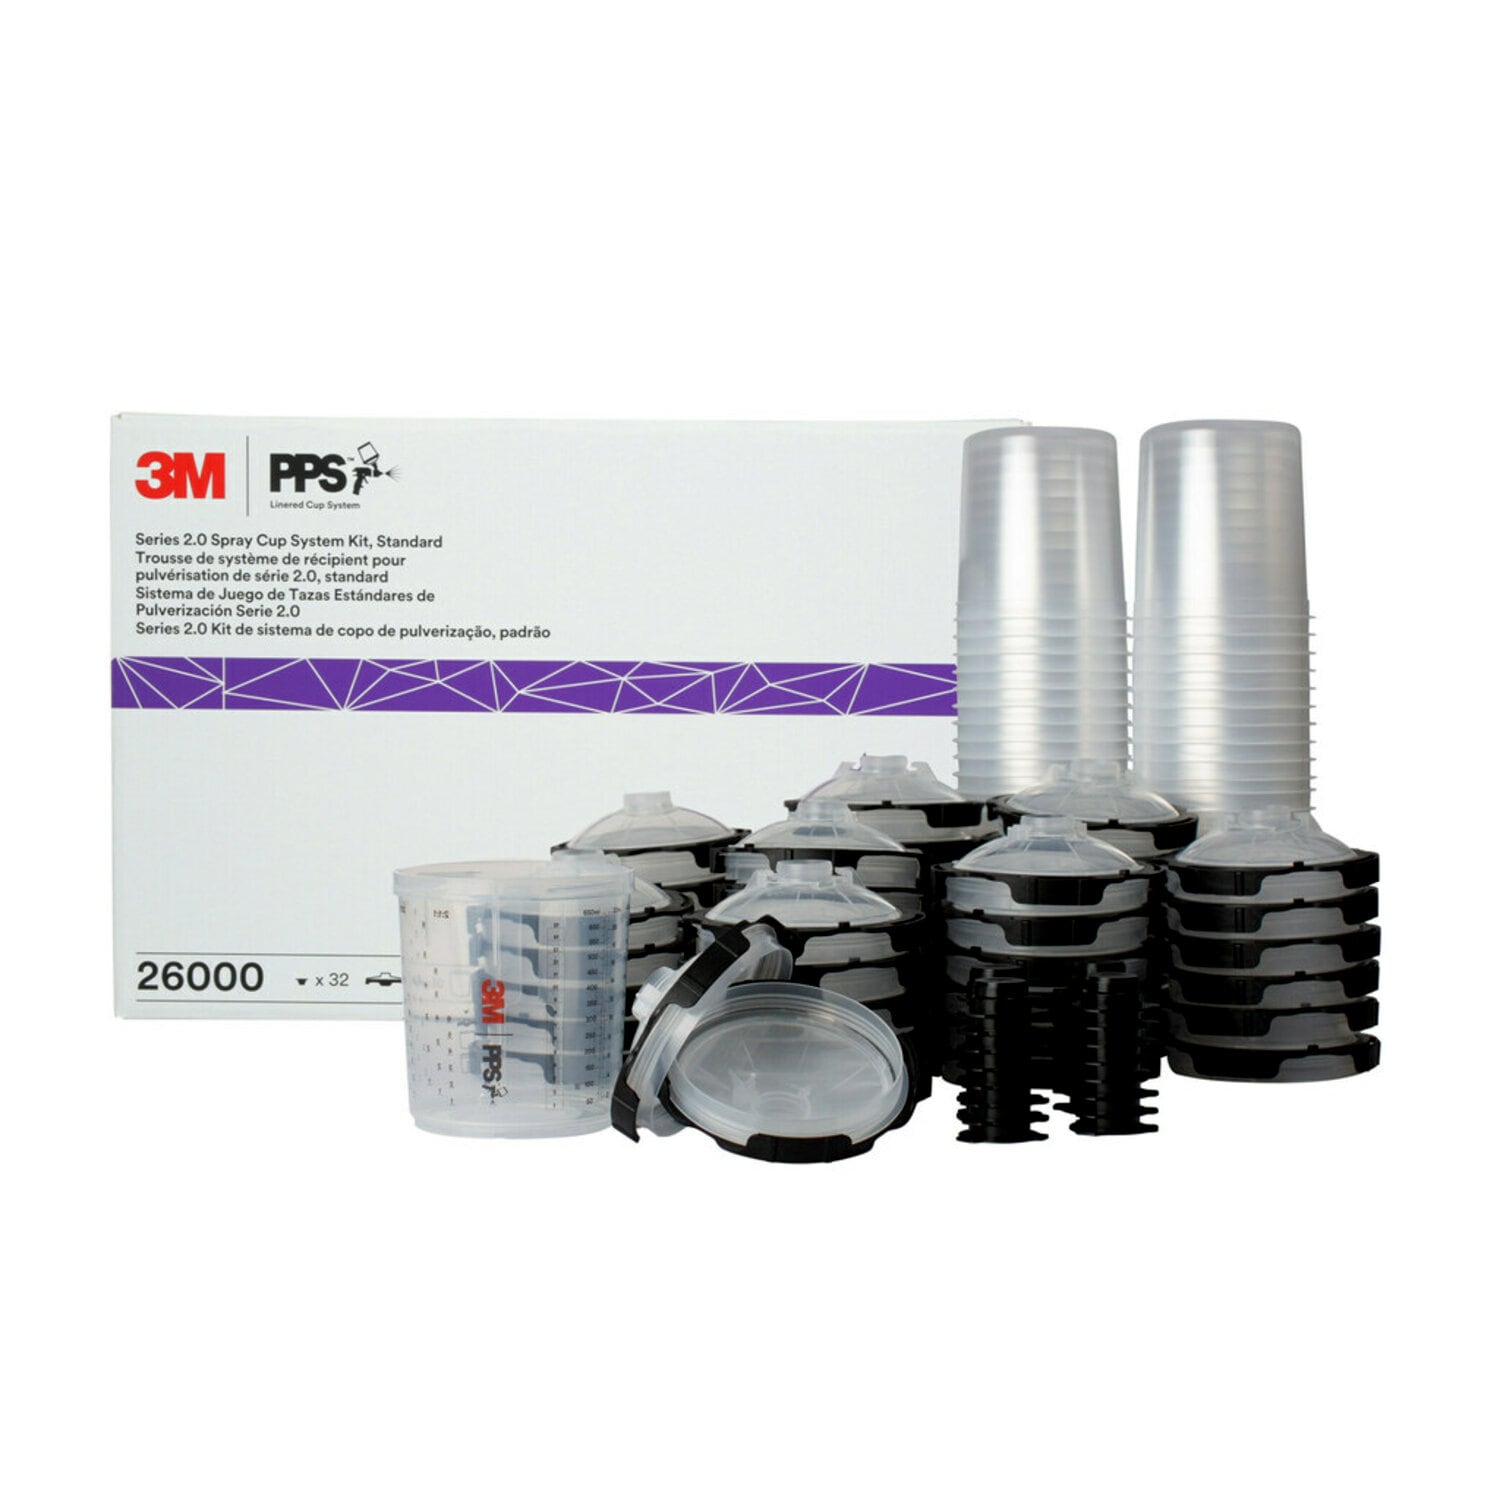 7100284557 - 3M PPS Series 2.0 Spray Cup System Kit 26000, Standard (22 fl oz, 650
mL), 200 Micron Filter, 1 Kit/Case